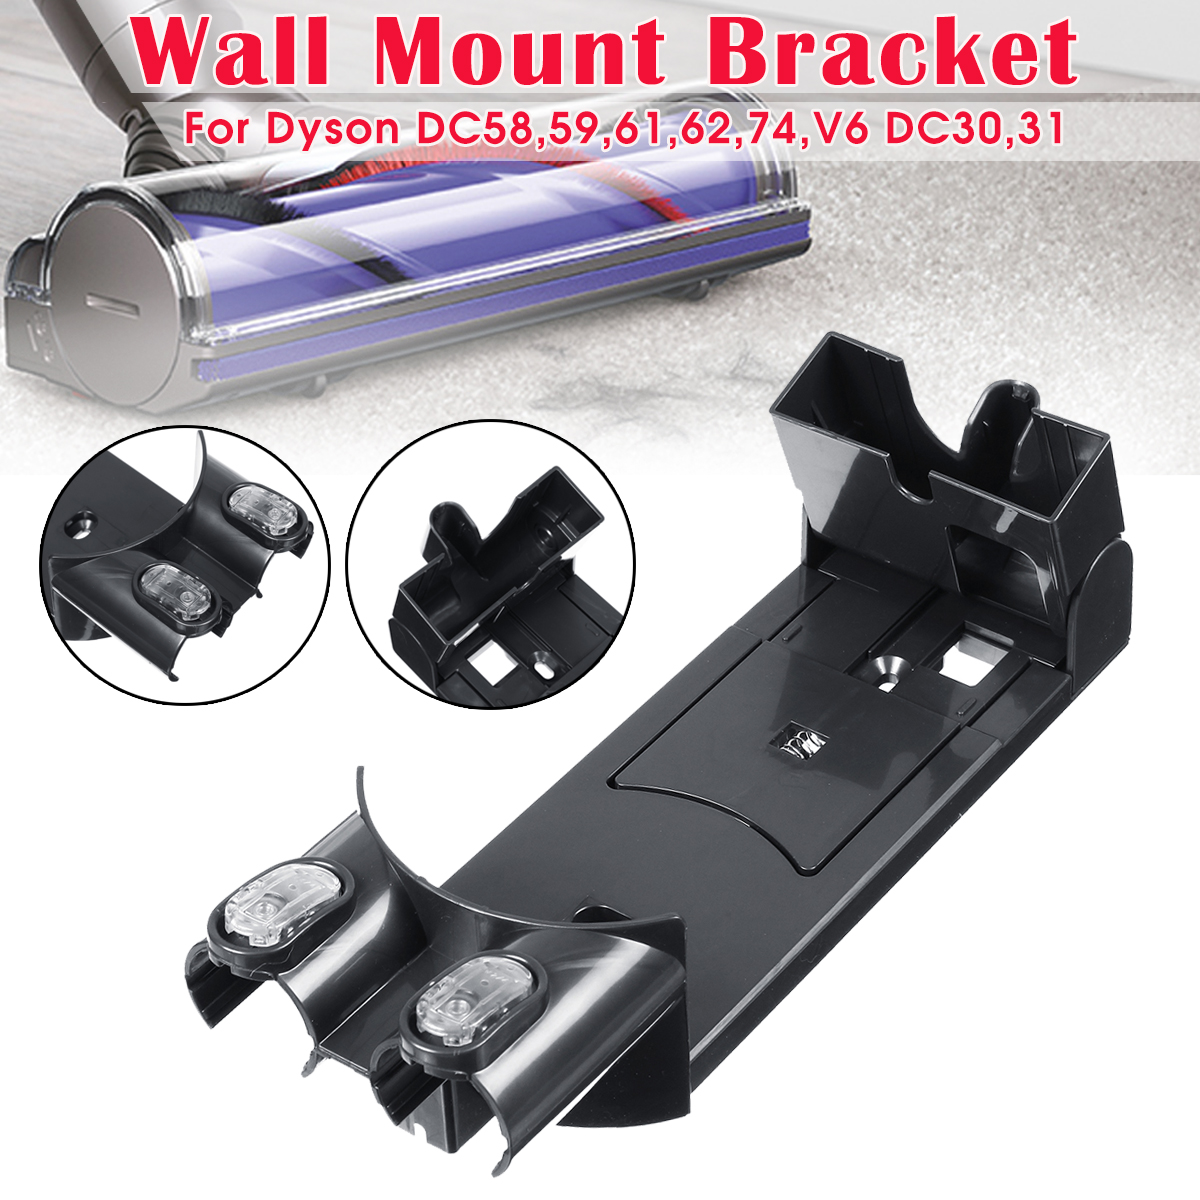 Handheld-Vacuum-Cleaner-Wall-Mount-Bracket-For-Dyson-DC5859616274V6DC3031-1559068-1